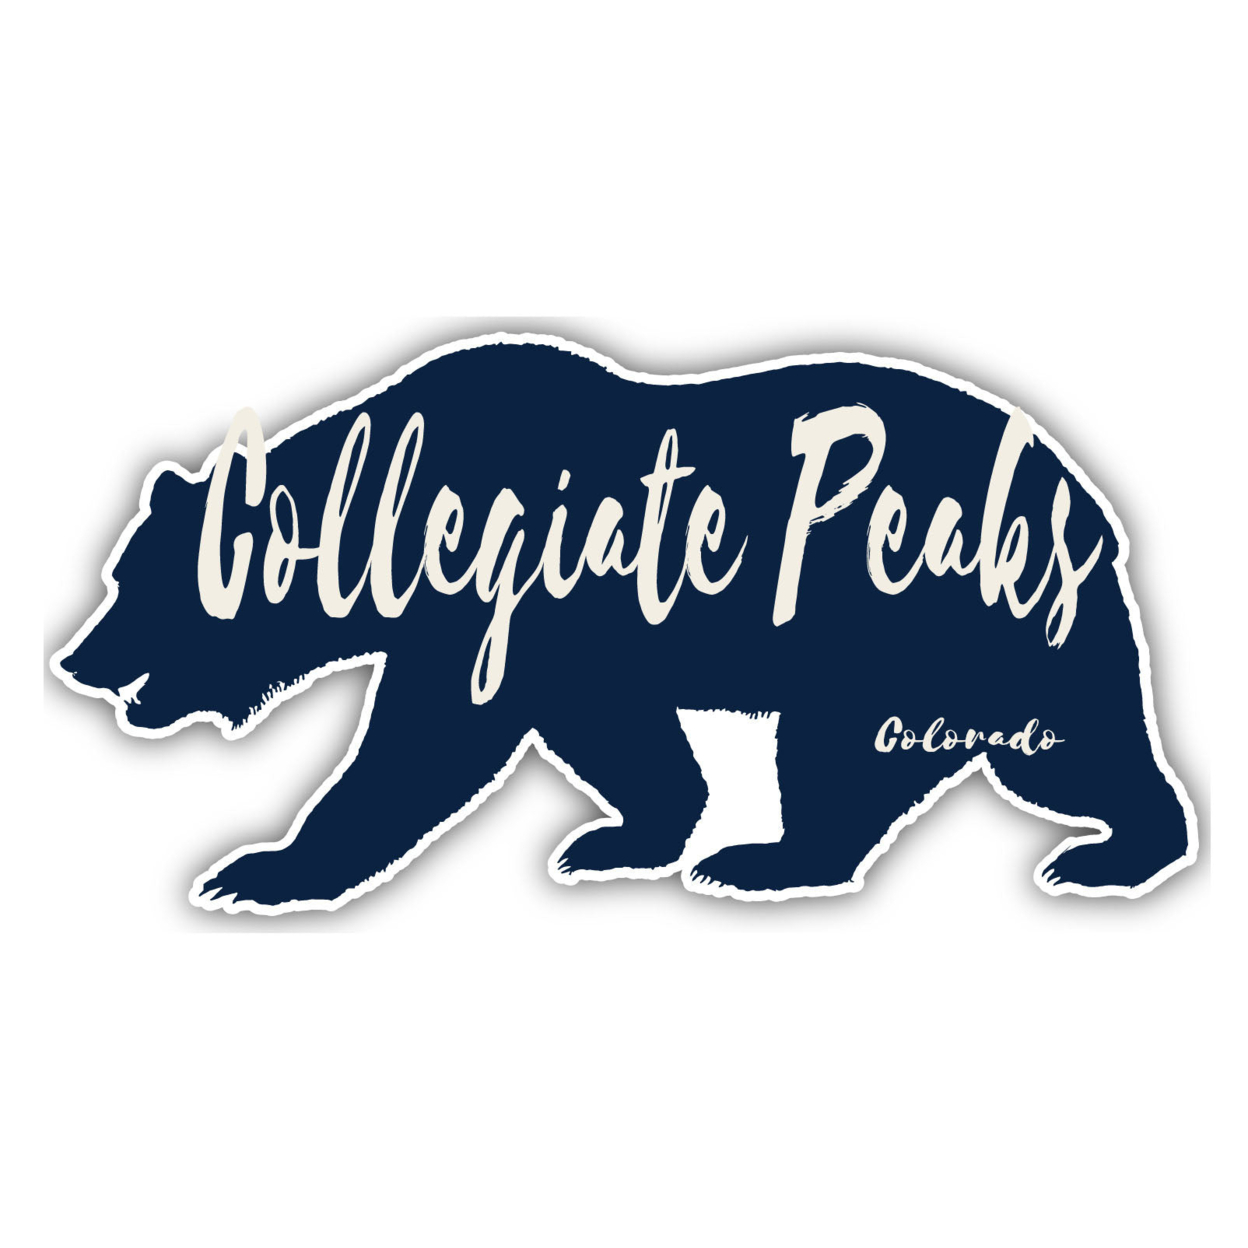 Collegiate Peaks Colorado Souvenir Decorative Stickers (Choose Theme And Size) - Single Unit, 12-Inch, Camp Life